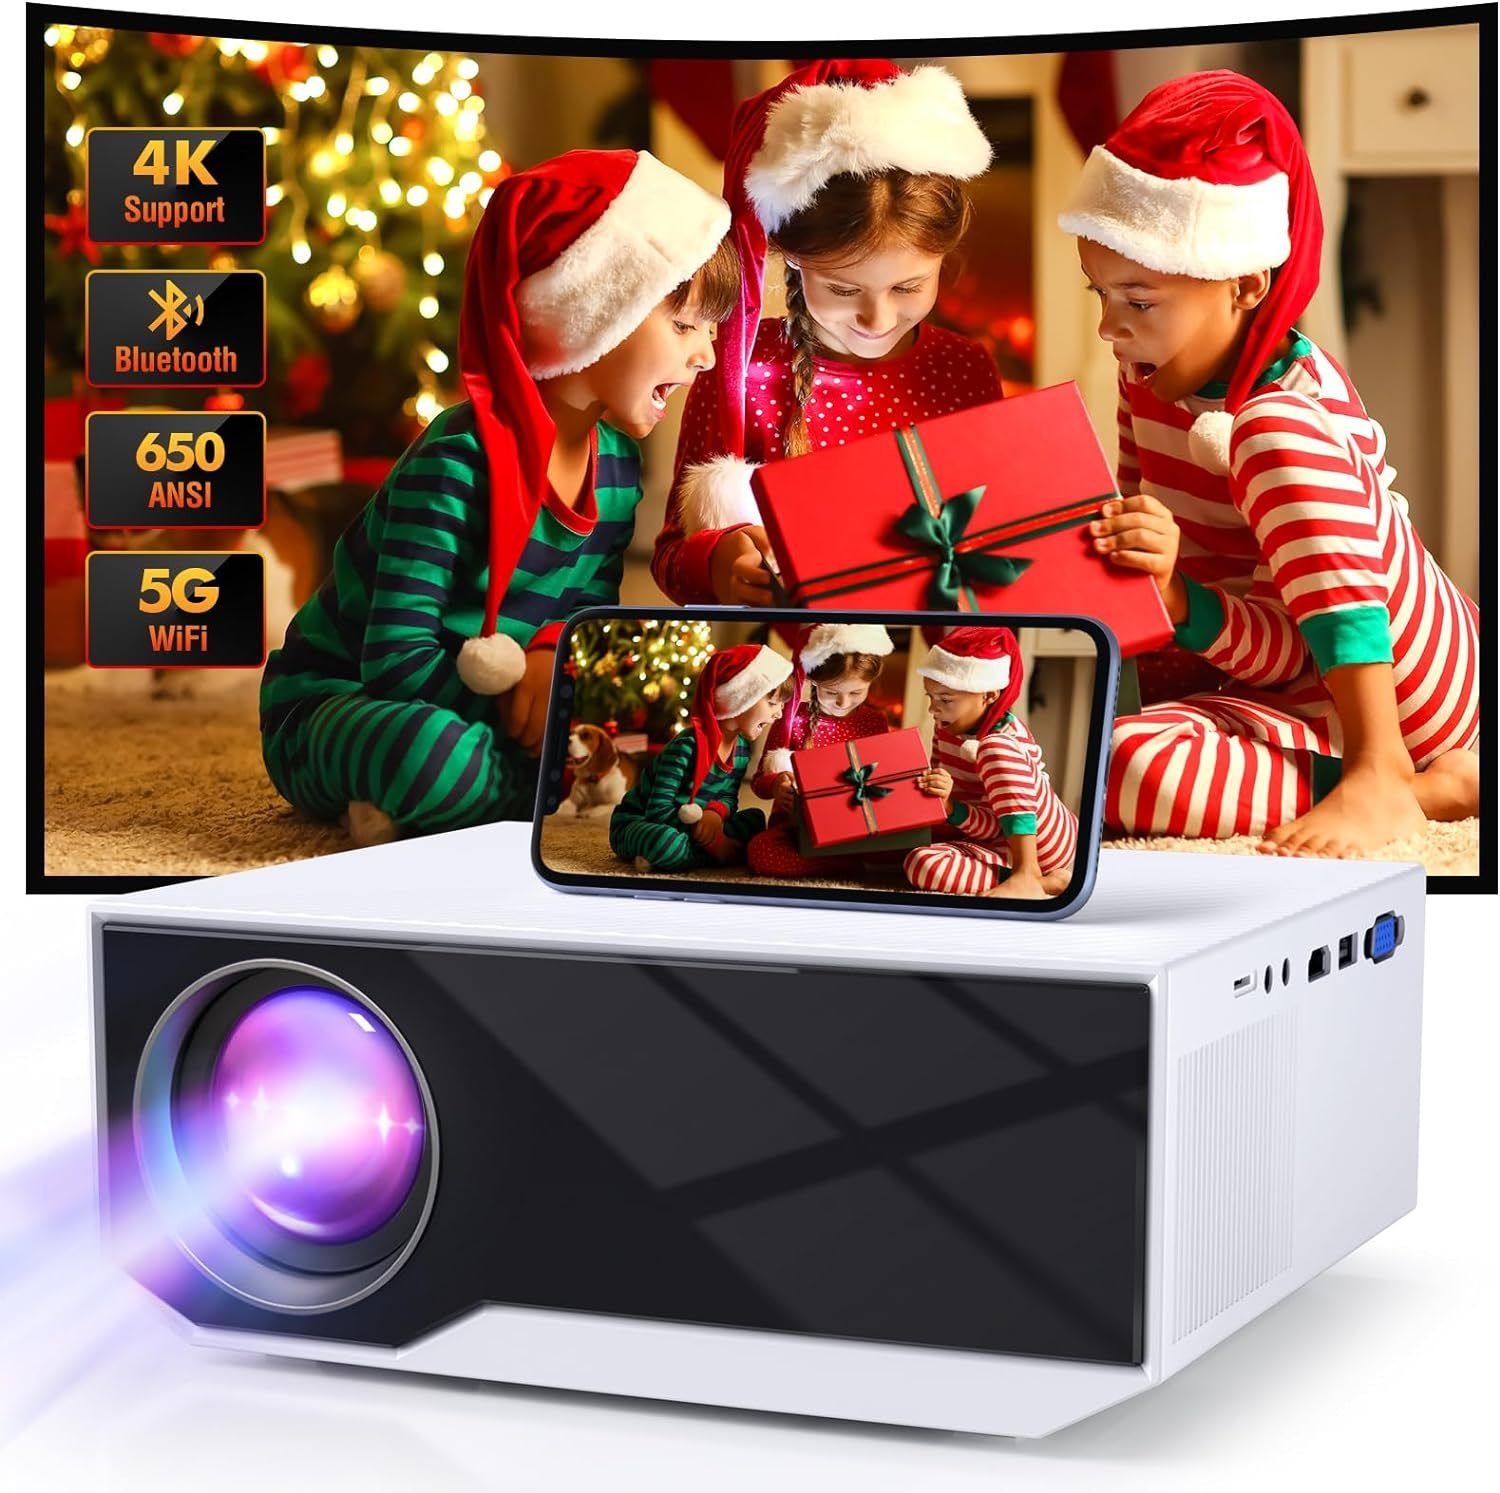 Wielio Portabler Projektor (22000 lm, 1920 x 1080 px, 5G WiFi Bluetooth, Mini Outdoor/Home Video Beamer Full HD Native 1080P)